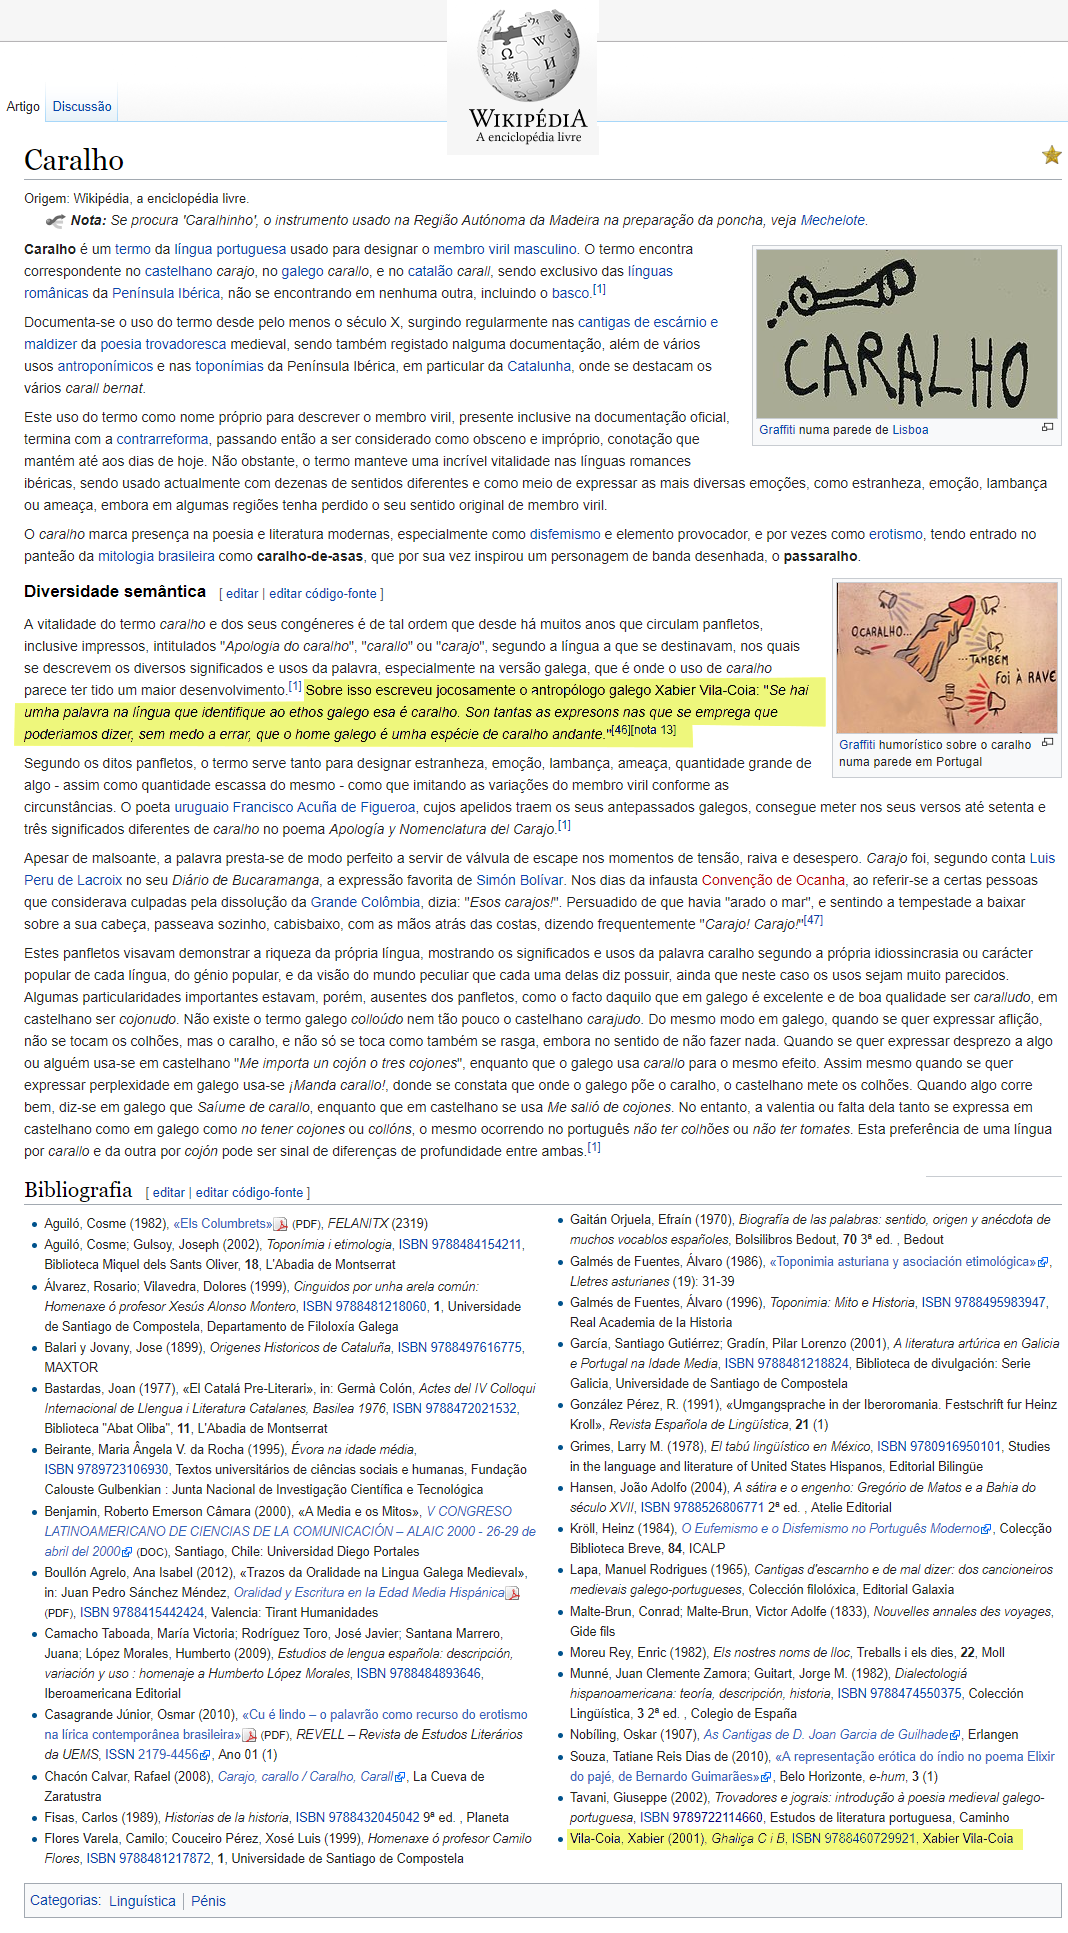 Wikipedia: “Caralho”.